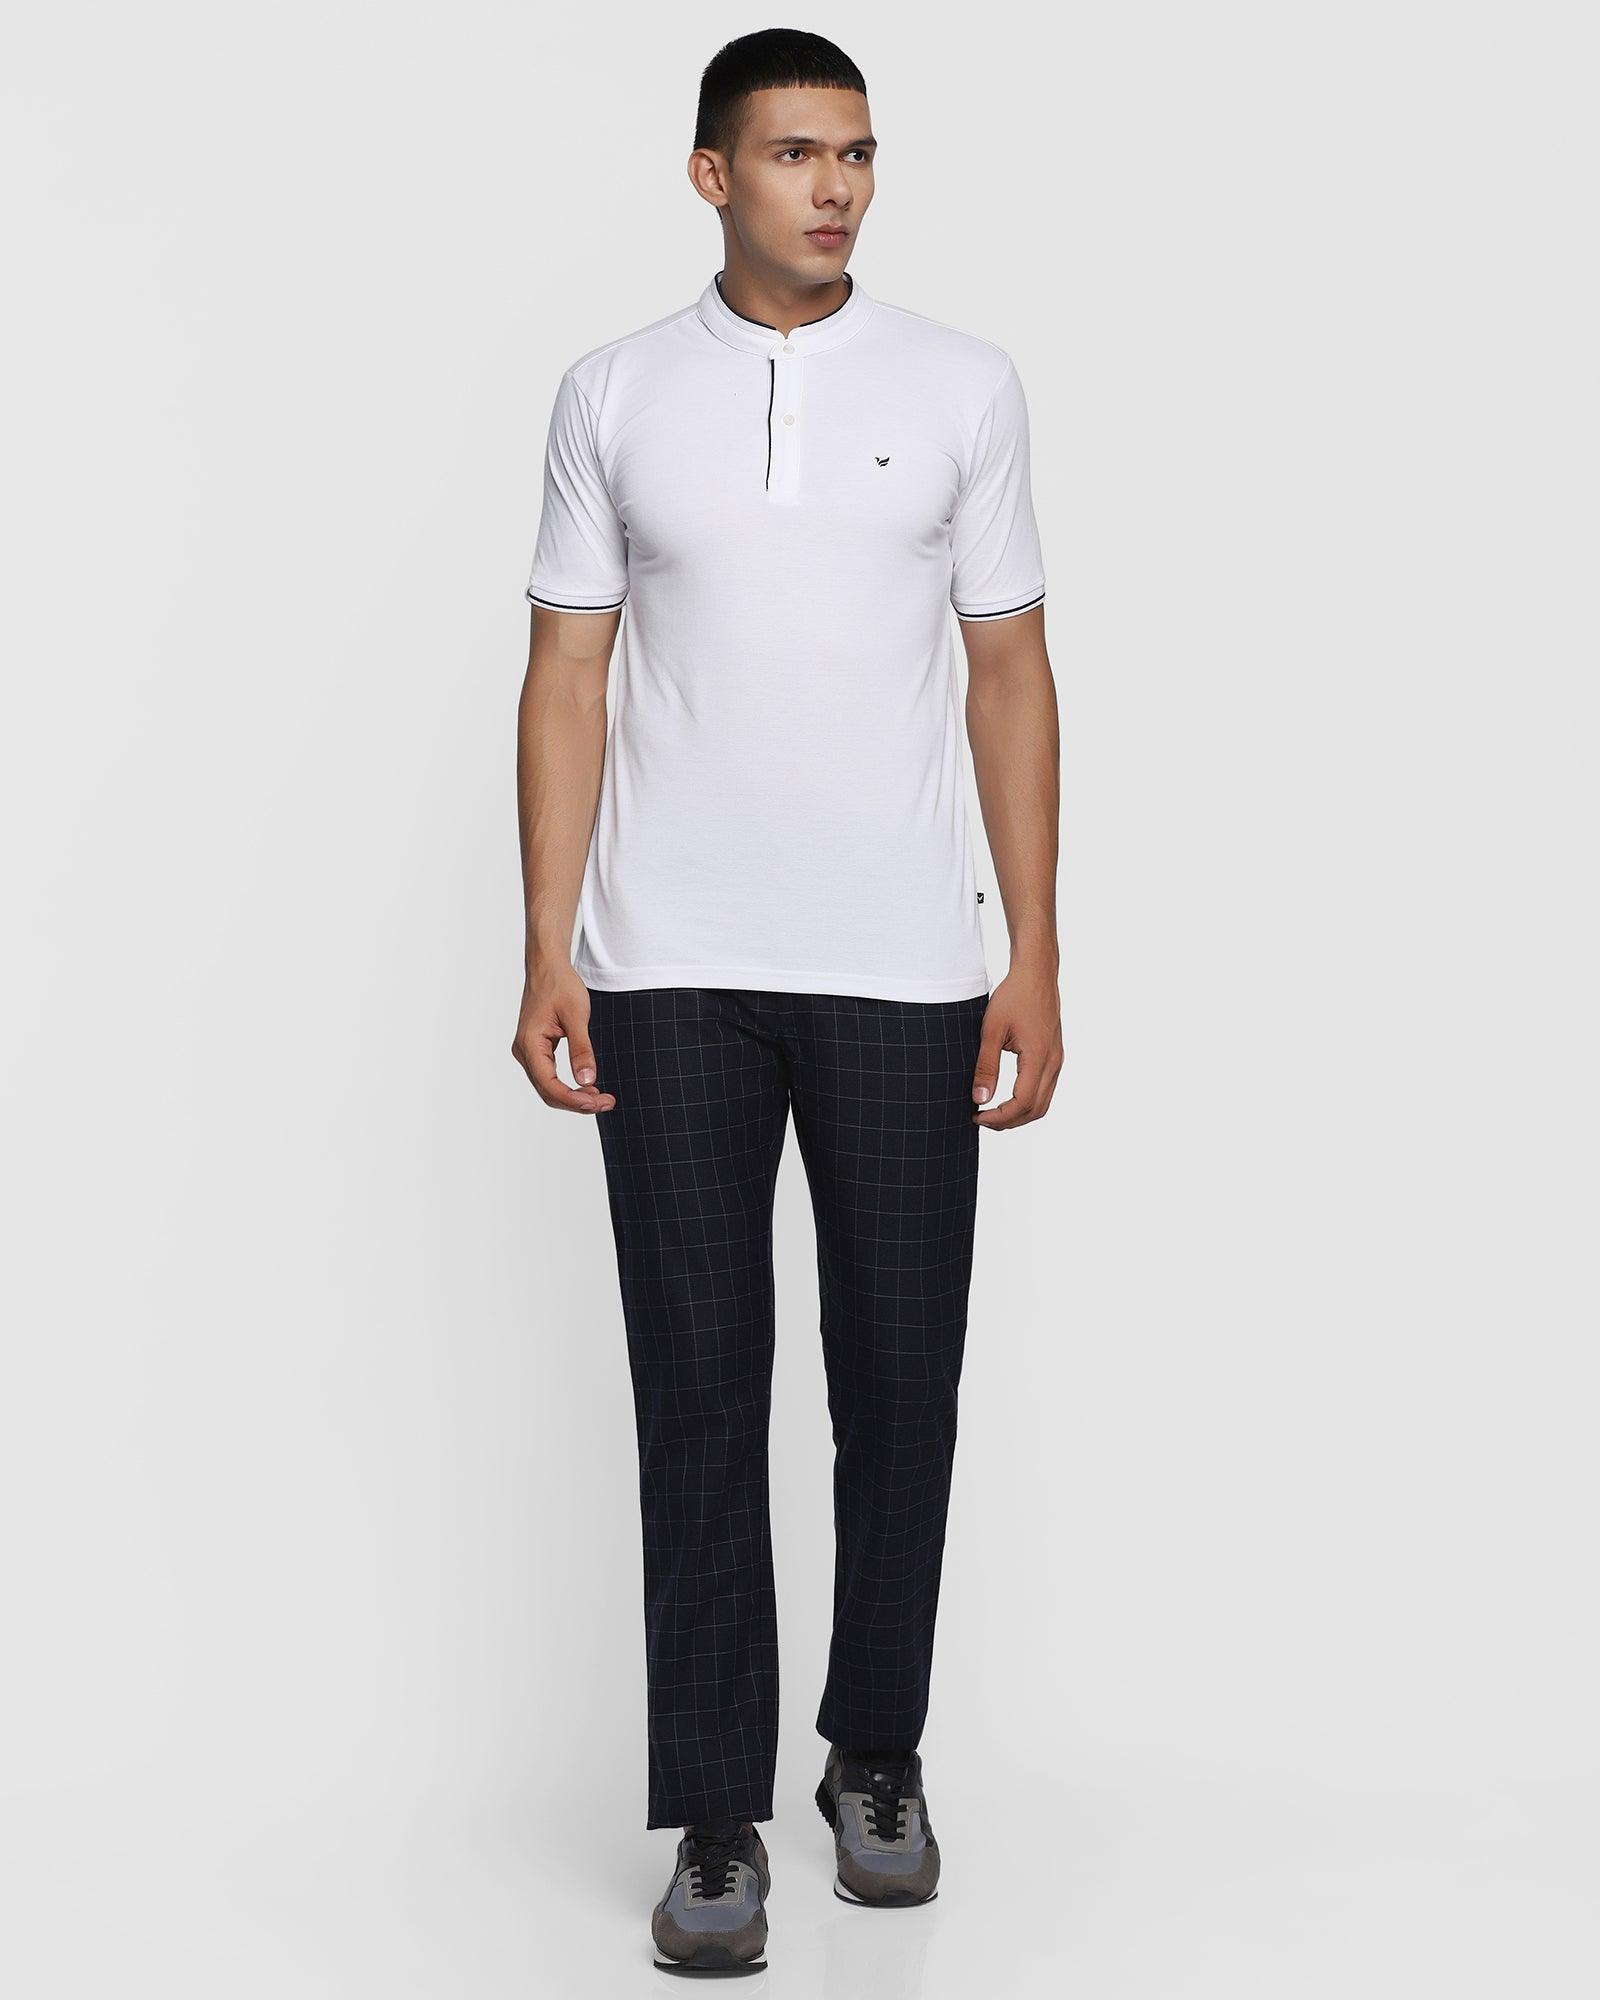 Mandarin Collar White Solid T Shirt - Dom